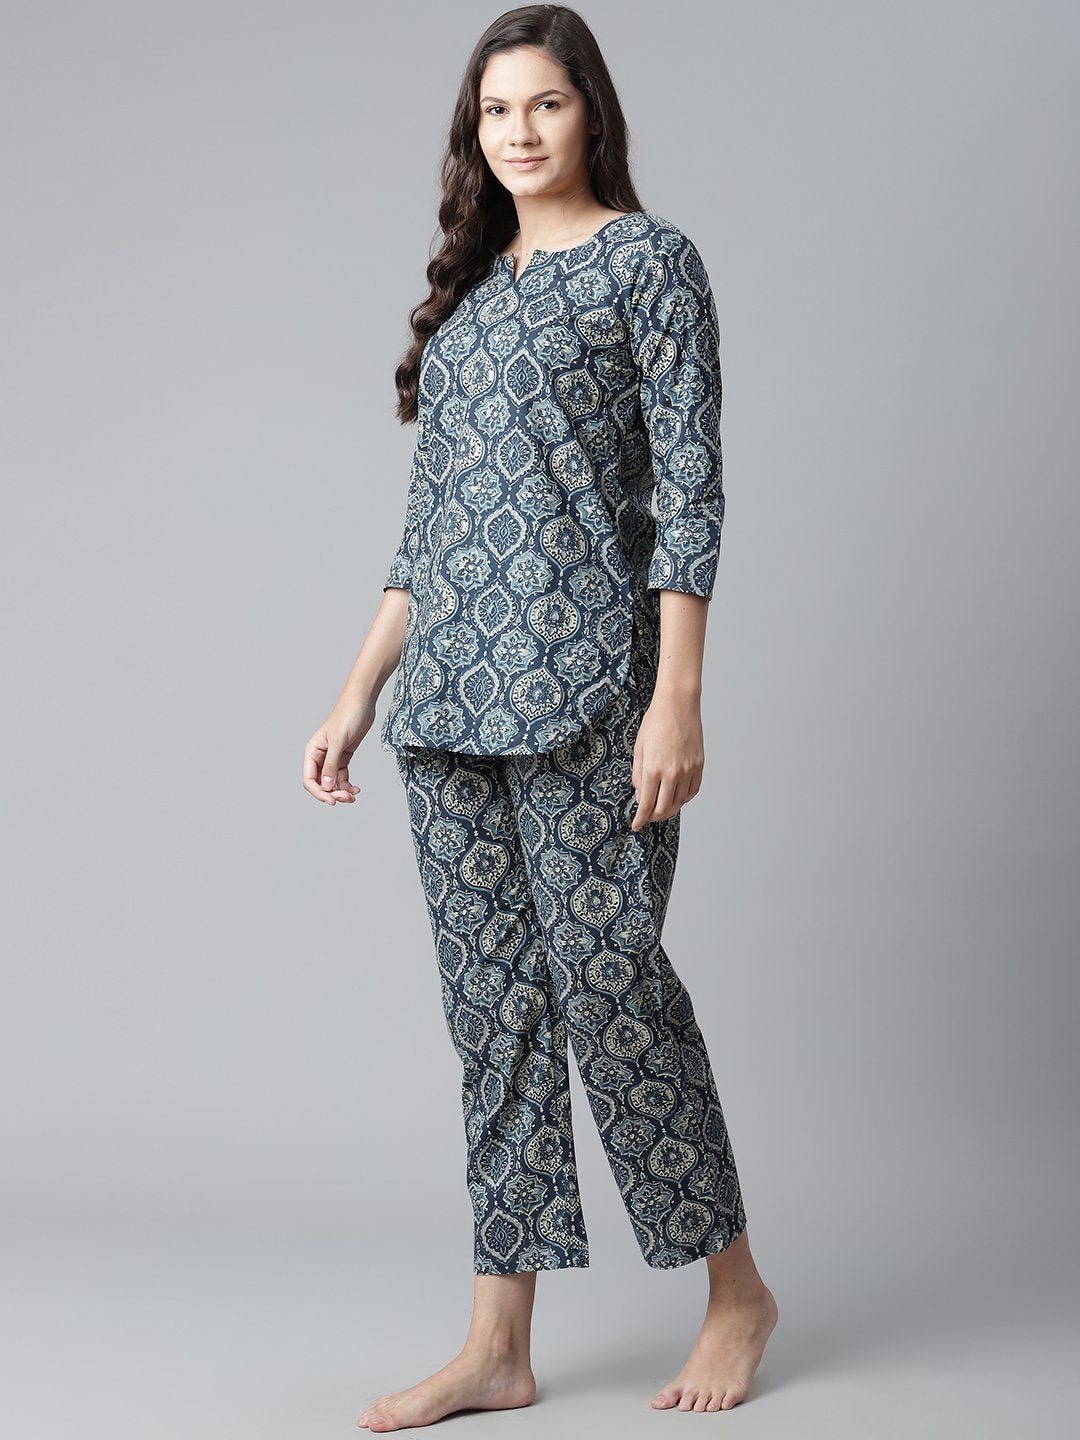 Women's Indigo Cotton Nightwear/Loungewear - Divena